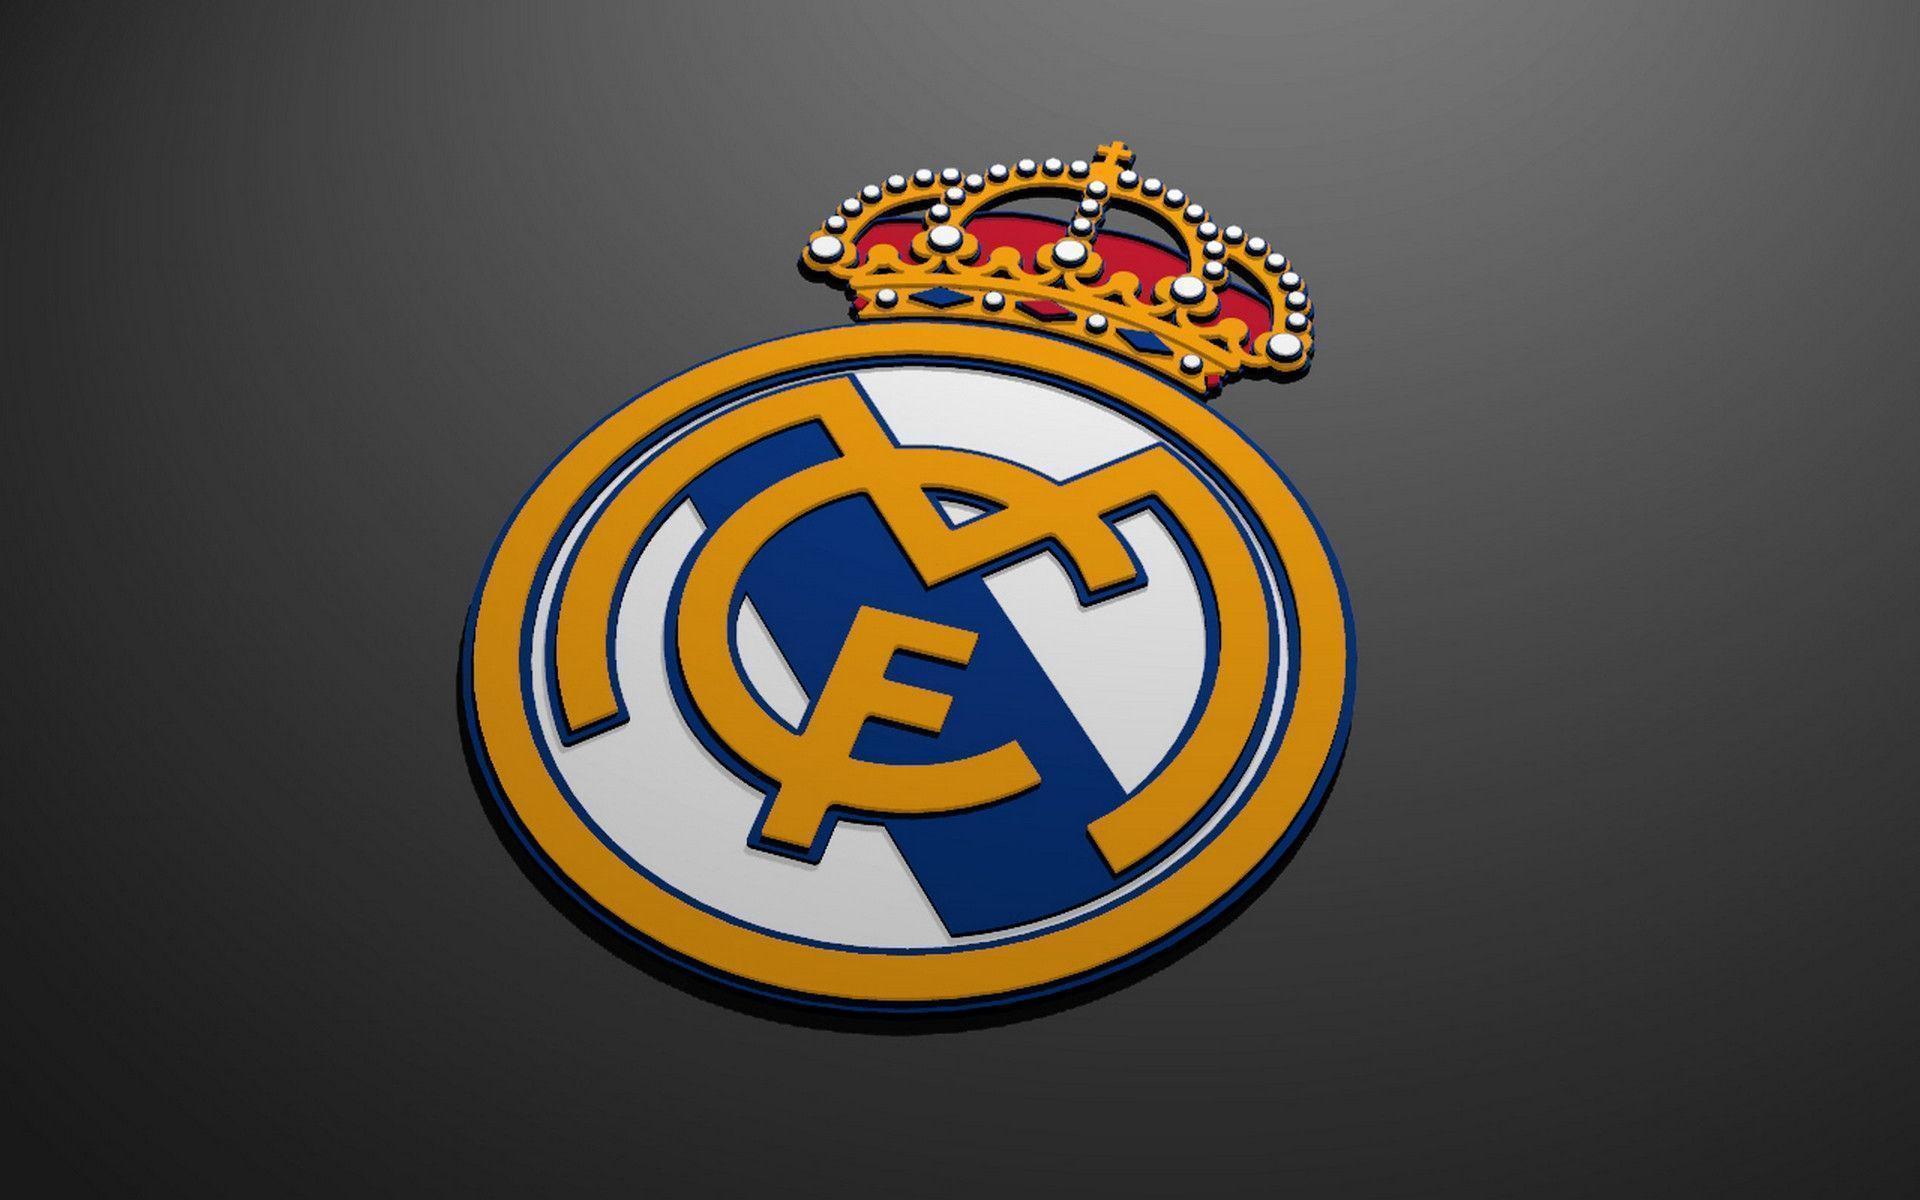 Real Madrid FC 3D Logo Wallpaper HD Wallpaper